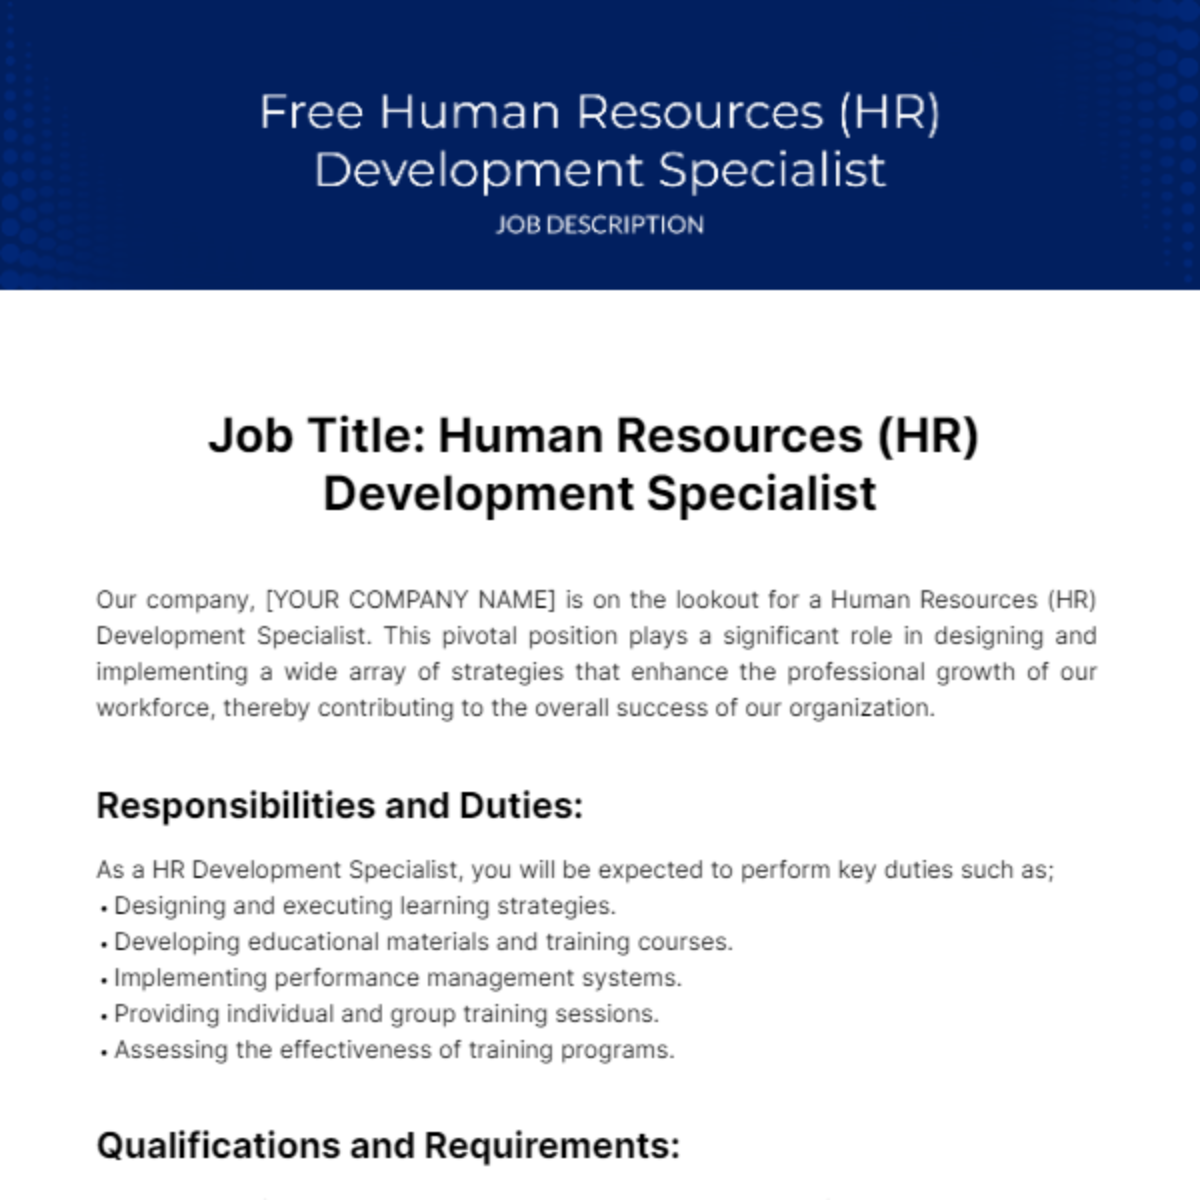 Human Resources (HR) Development Specialist Job Description Template